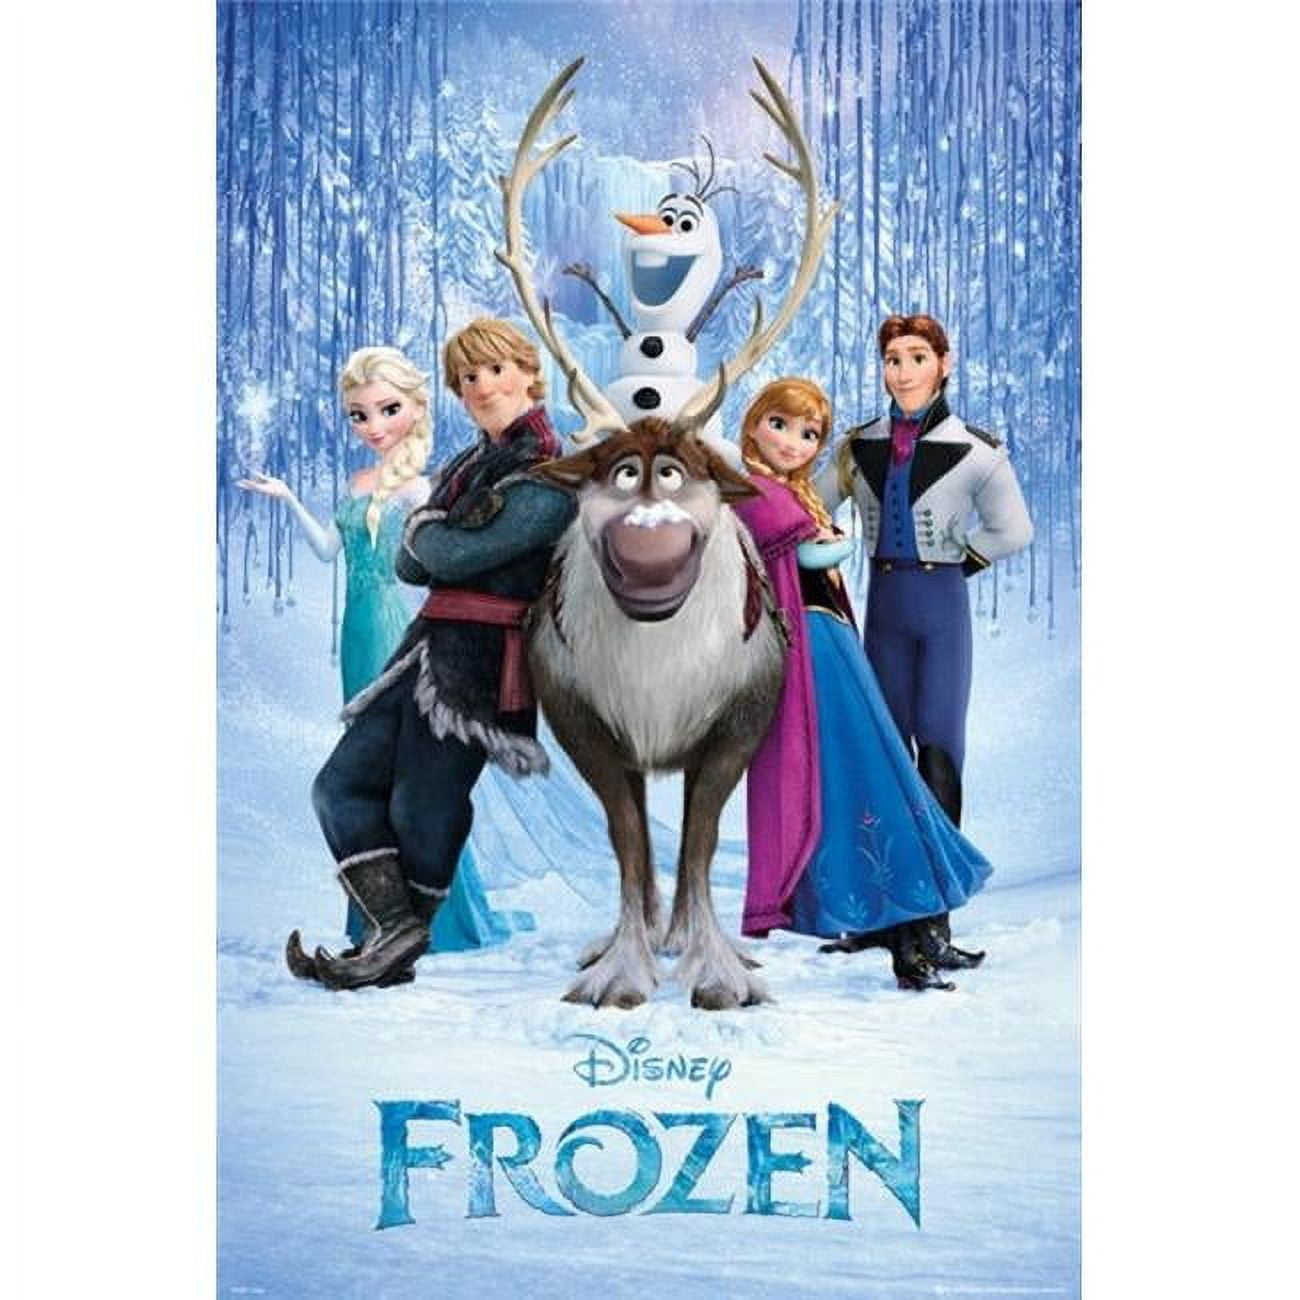 Poster Import XPE160054 Disney Frozen - Movie Cast Poster Print, 24 x 36